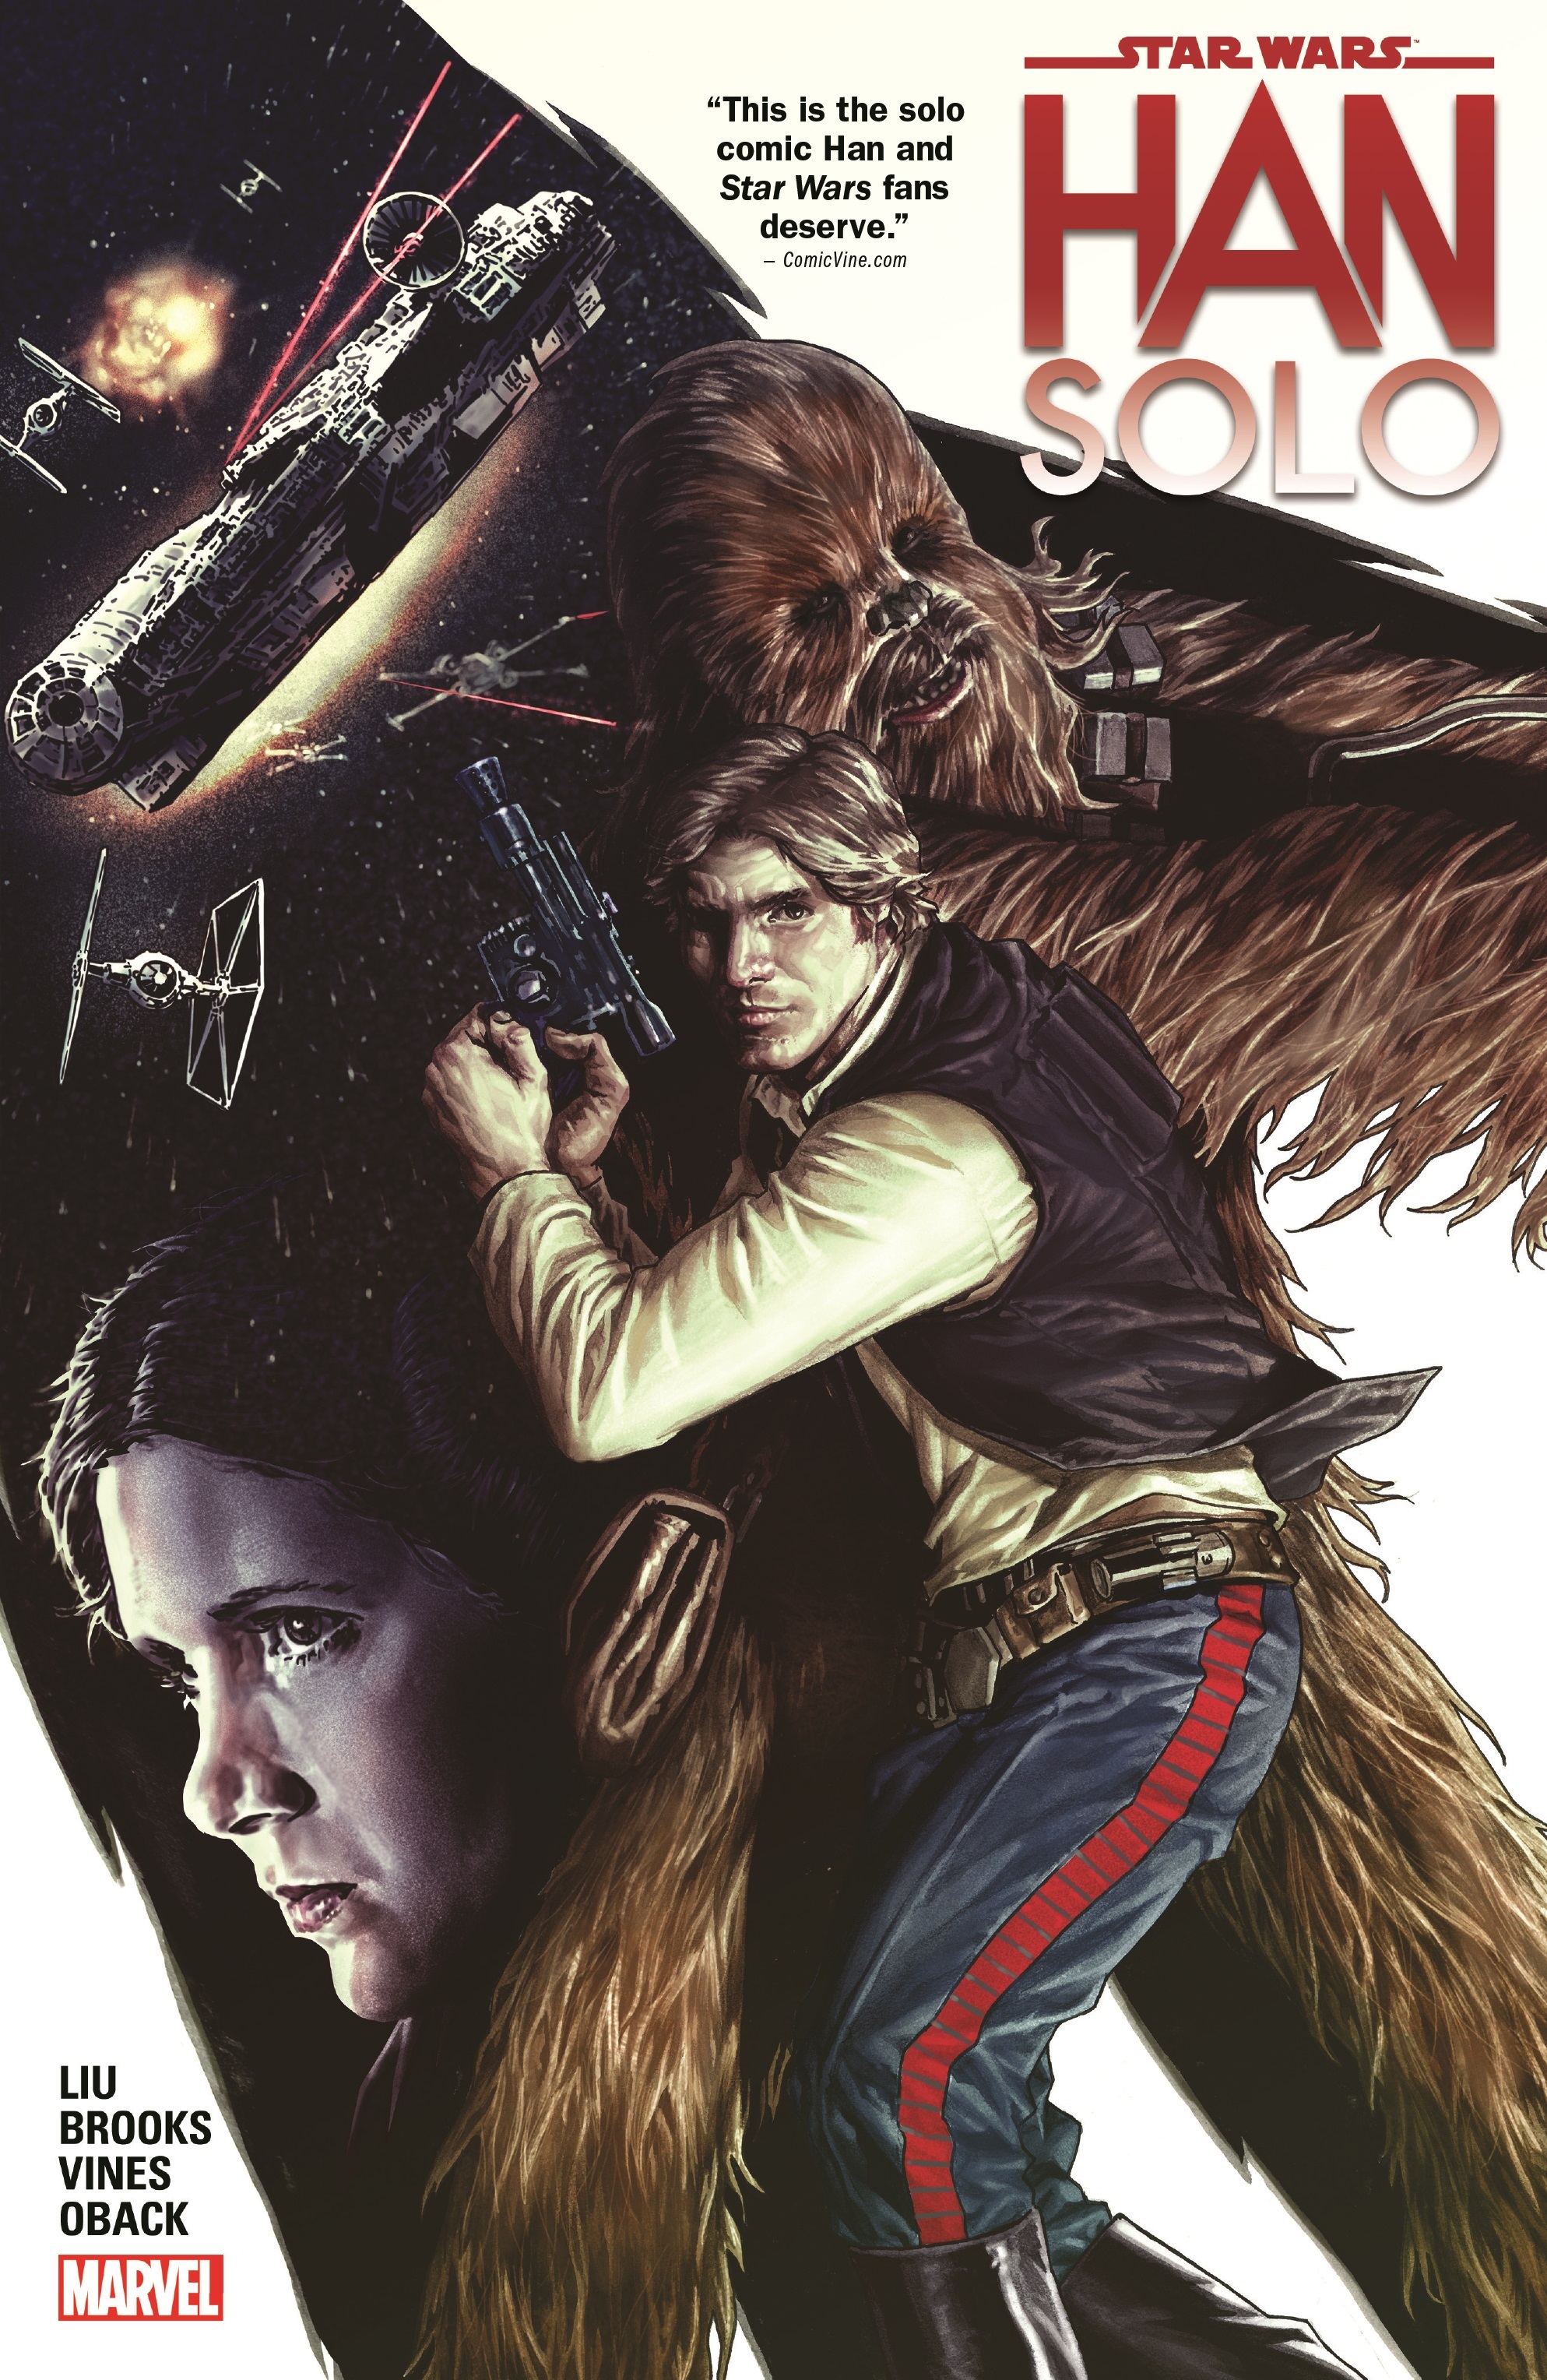 Star Wars: Han Solo (Trade Paperback)